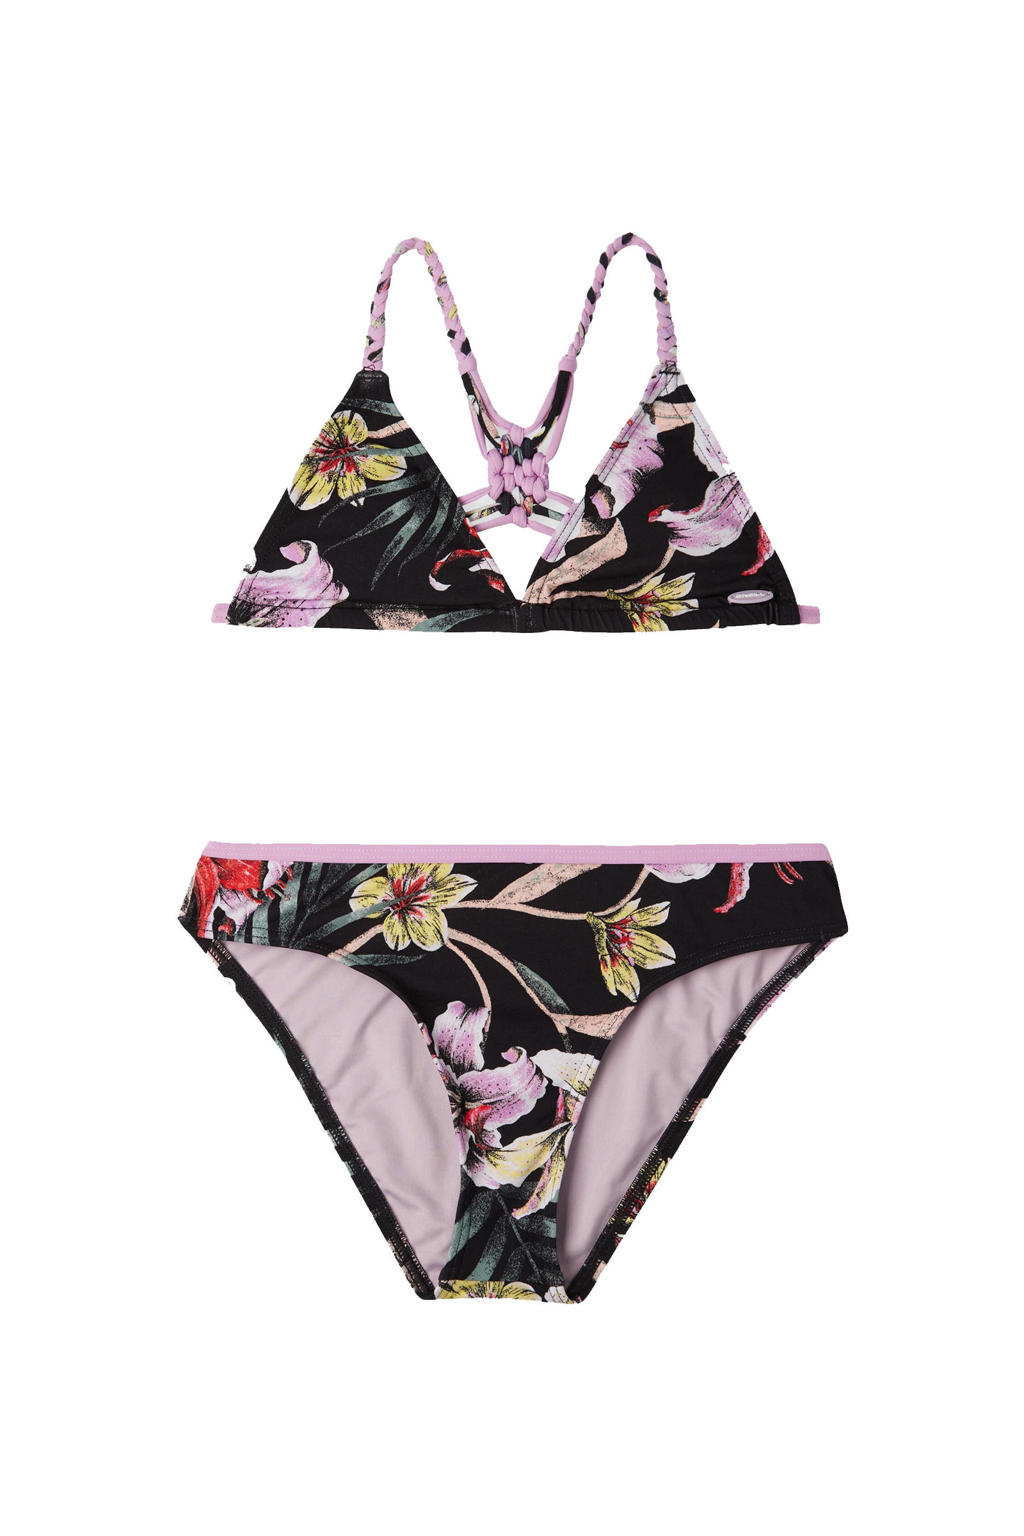 O'Neill gebloemde triangel bikini Tropics zwart/roze